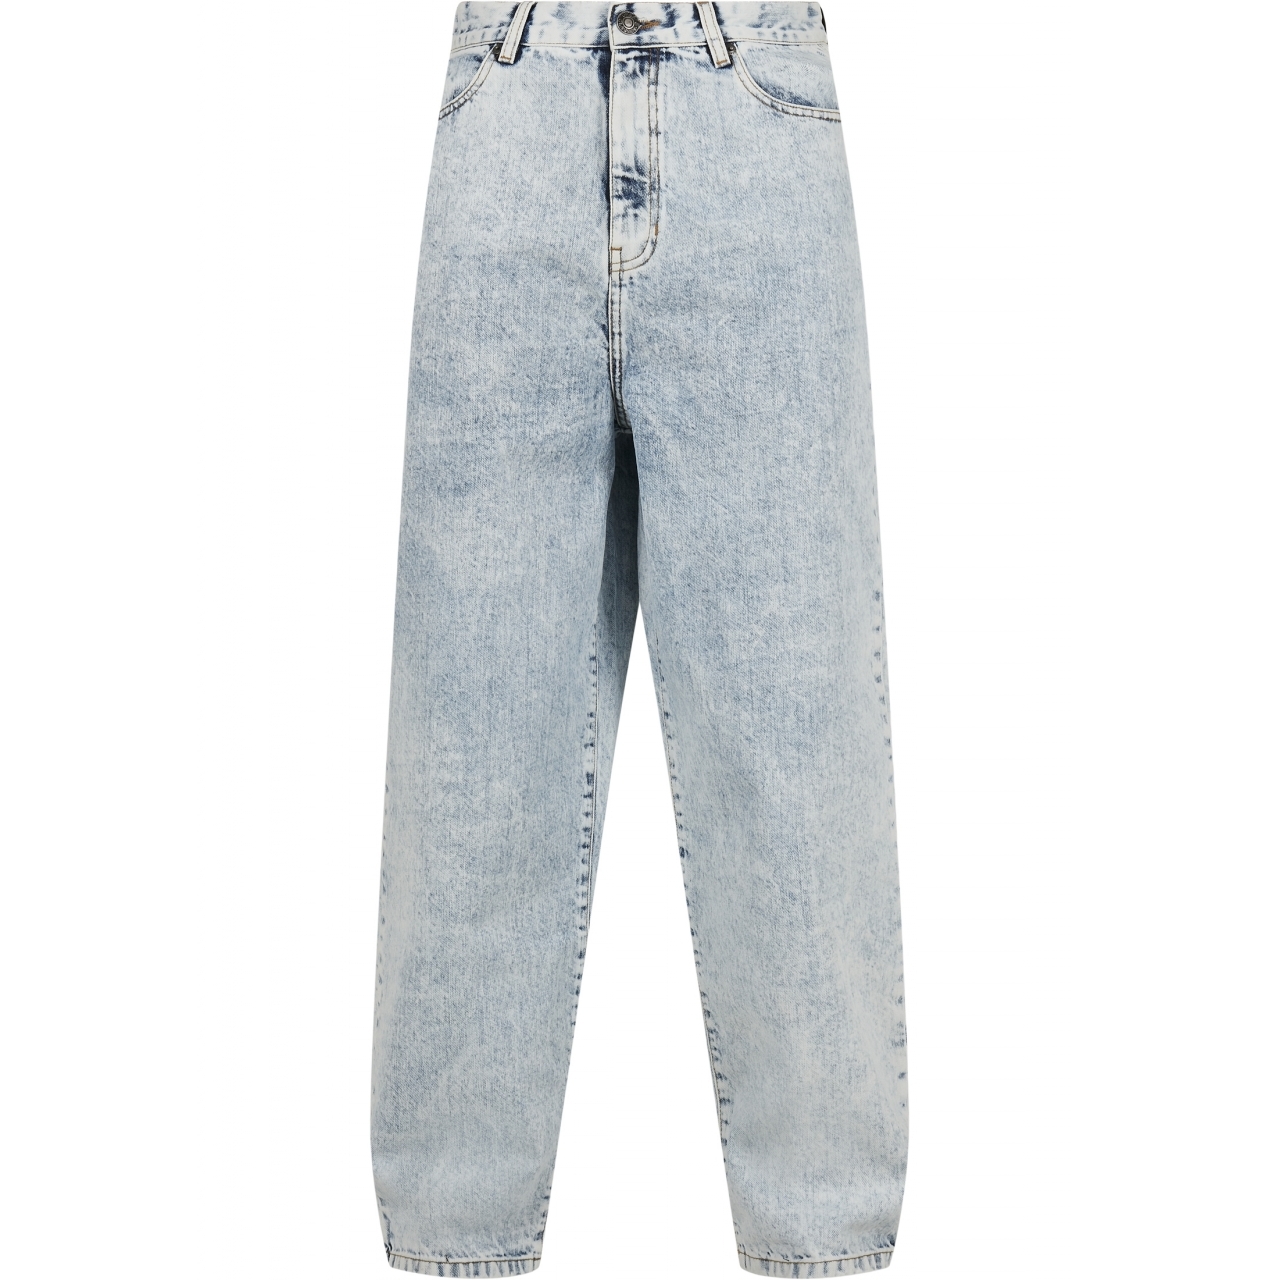 Džíny Urban Classics 90s Jeans - modré, 38